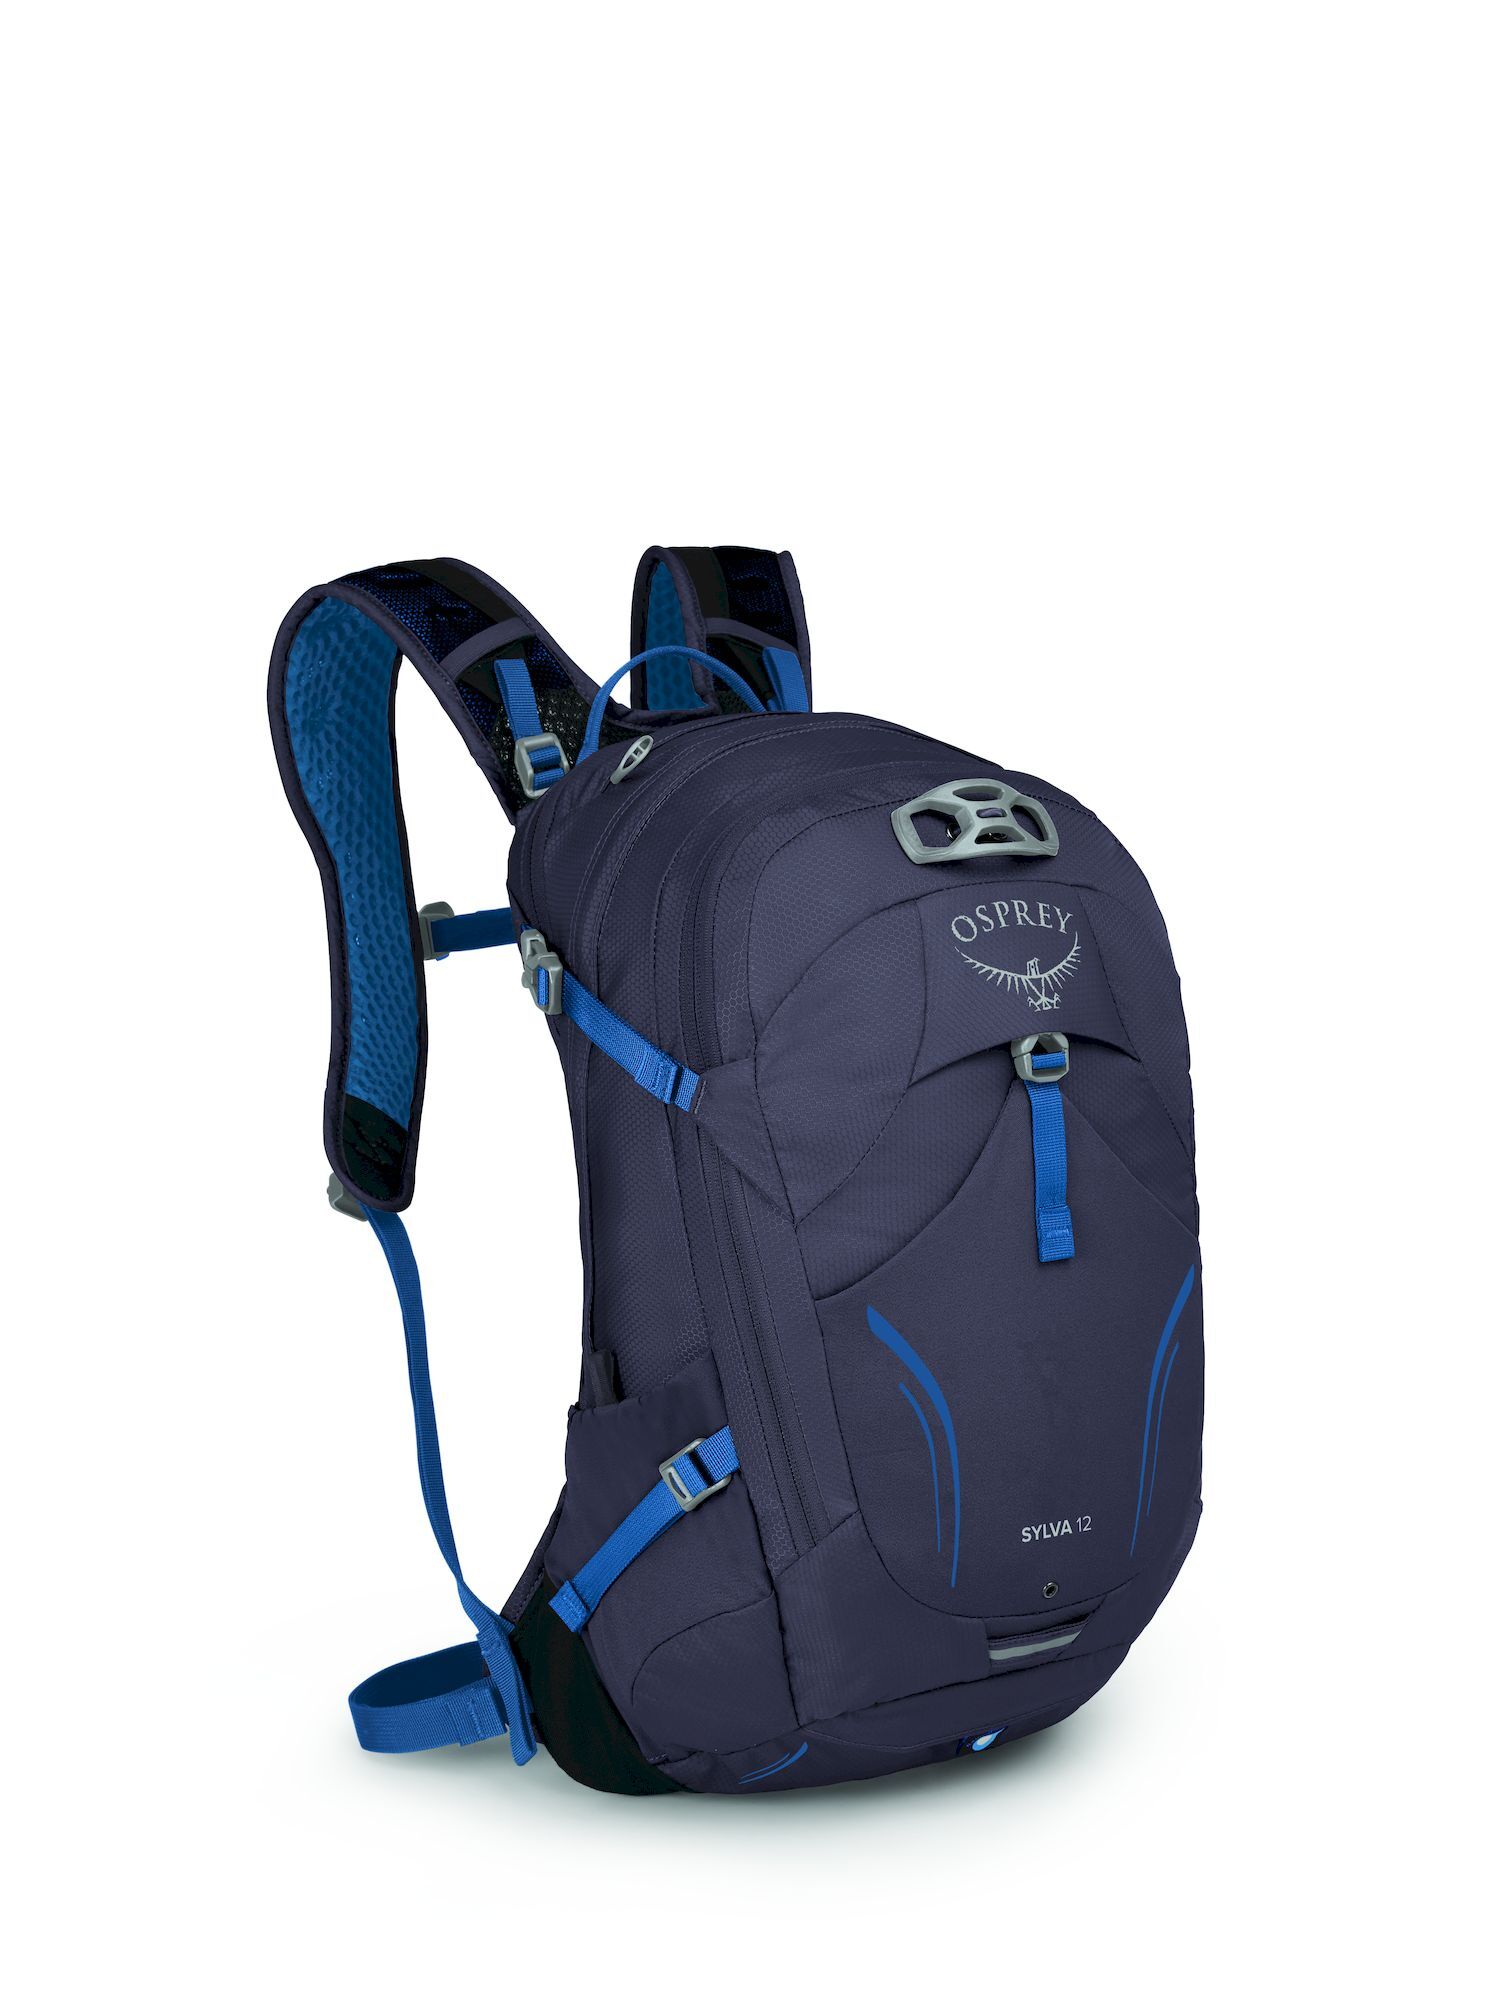 Osprey Sylva 12 - Cycling backpack - Women's